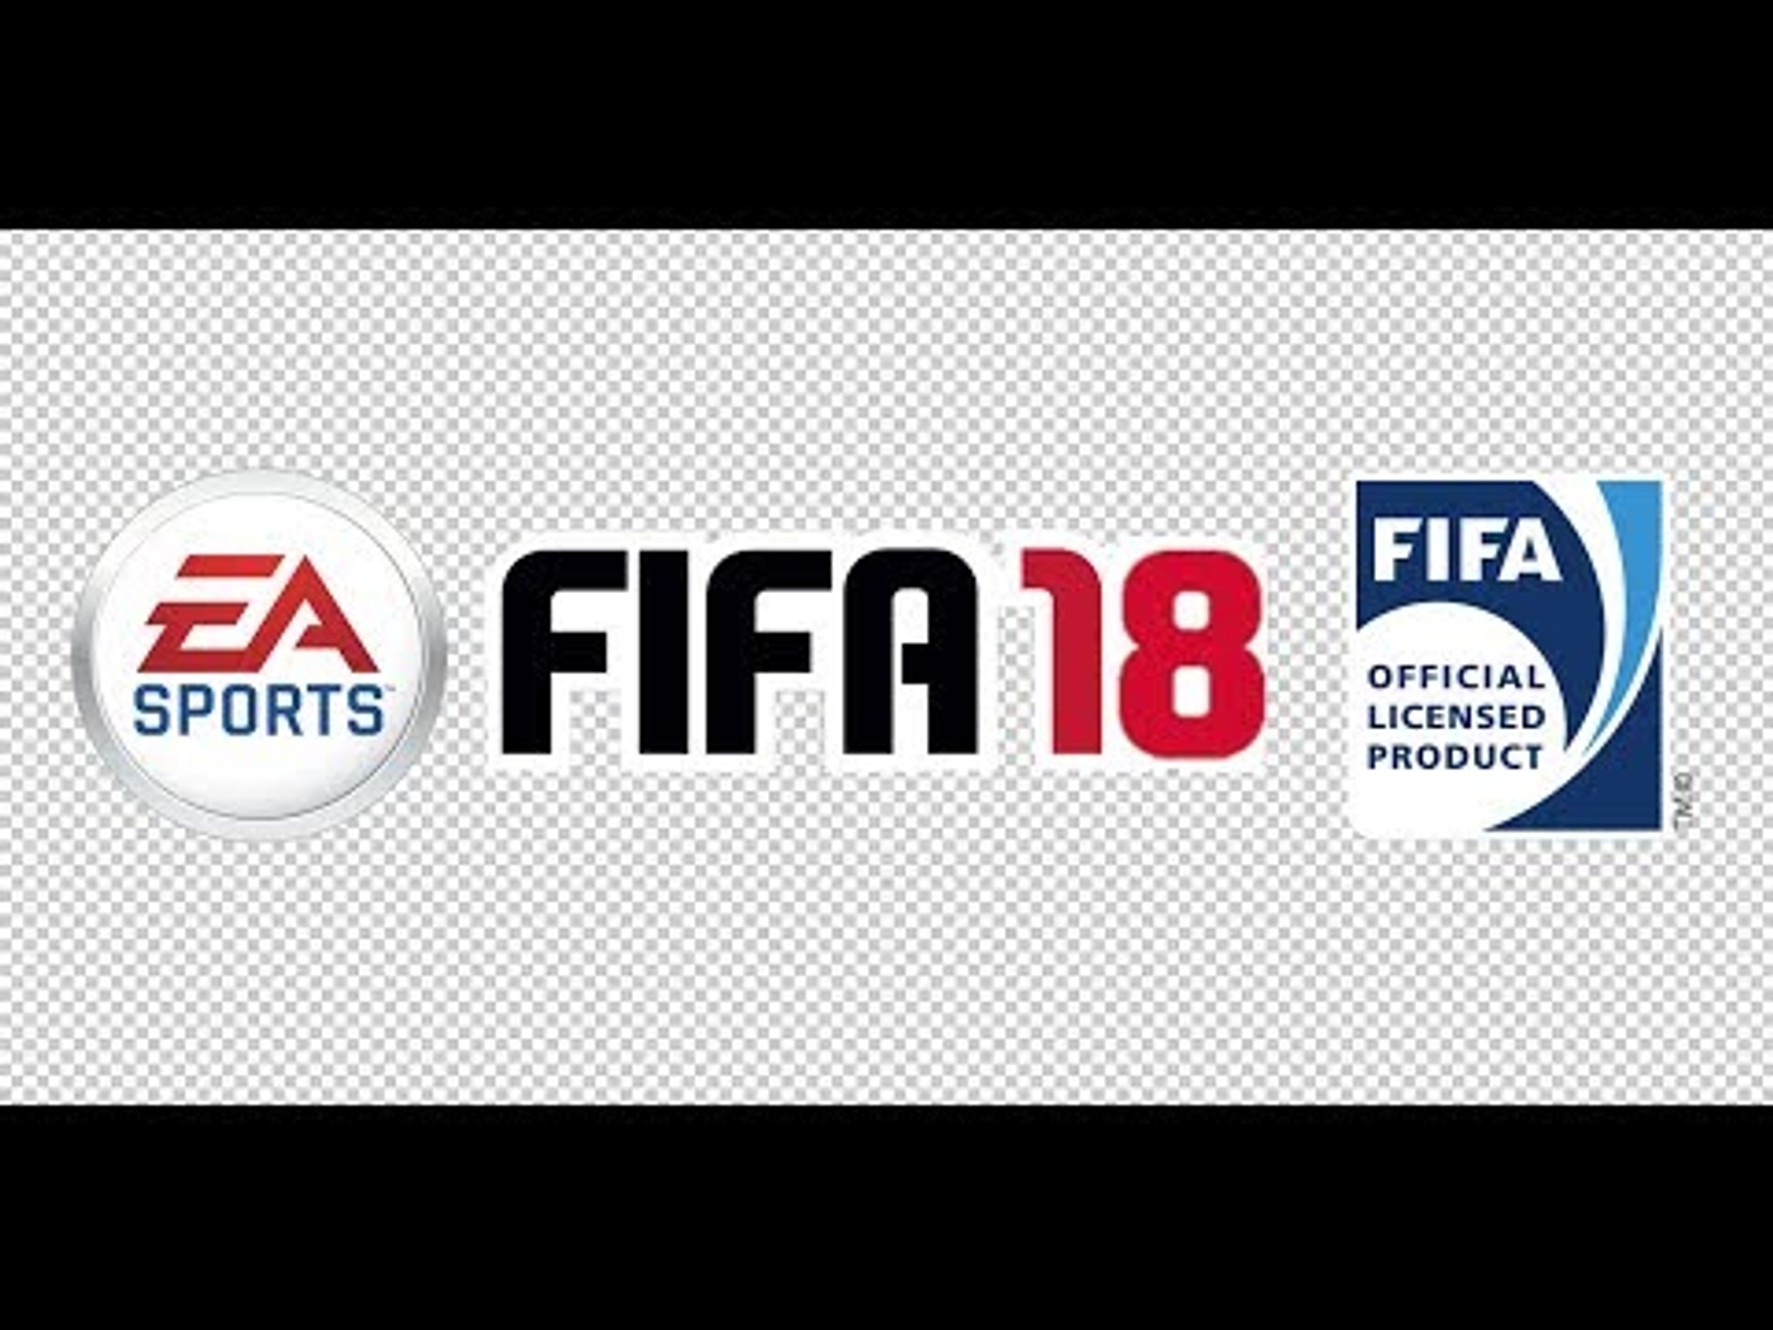 Fifa 09 setup free download